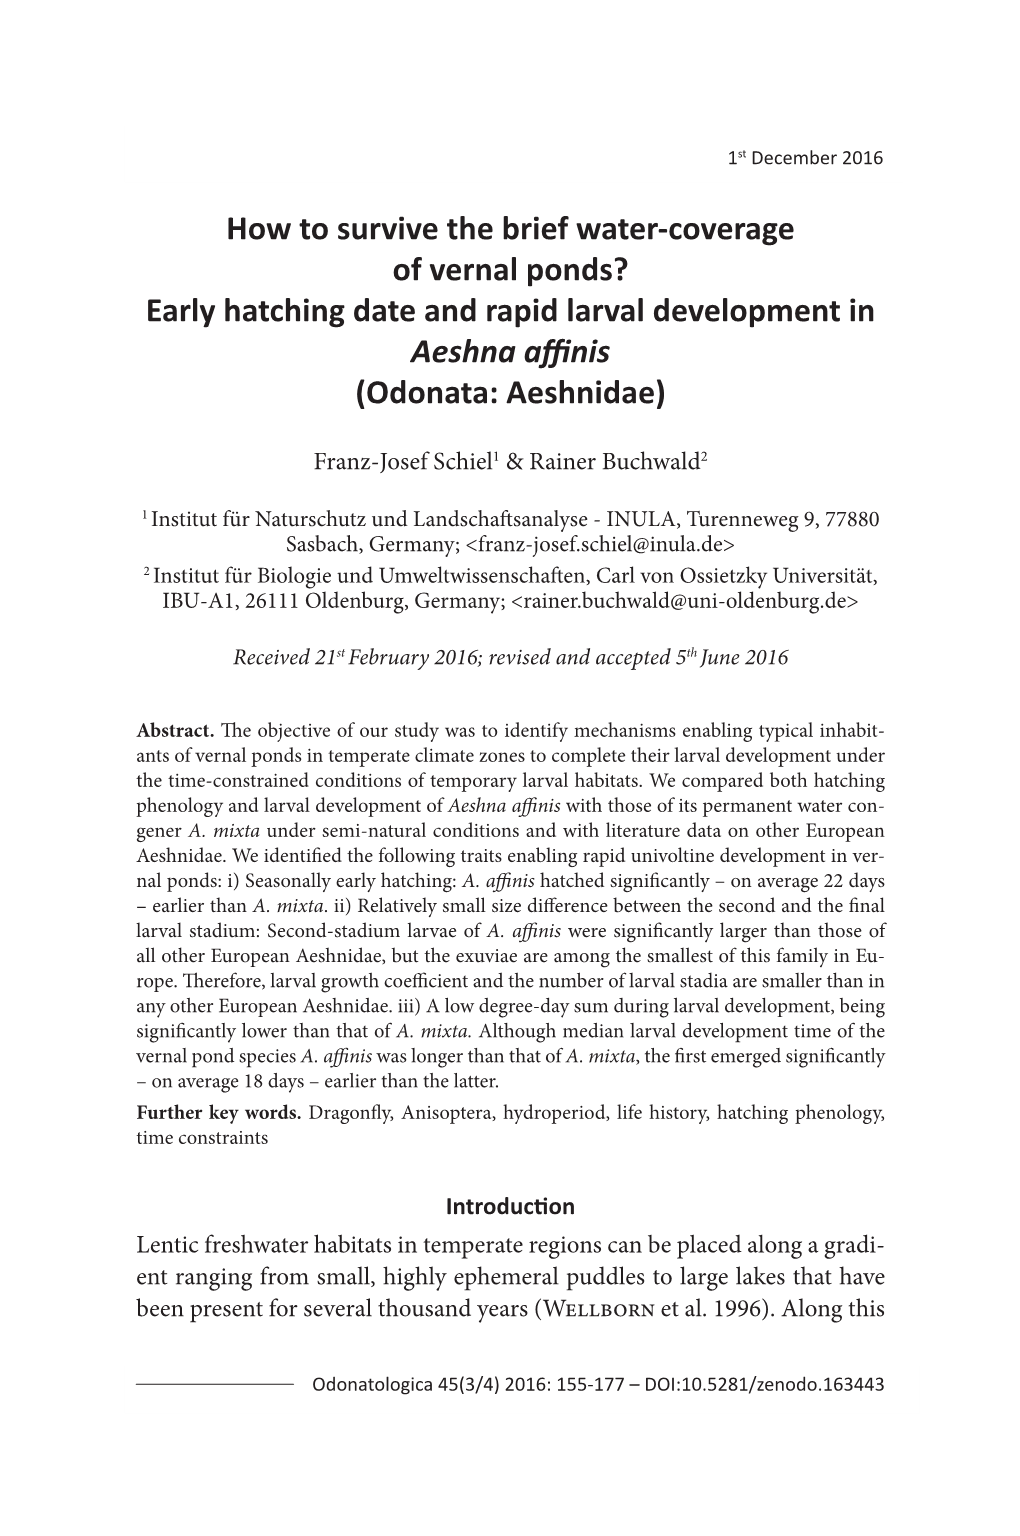 Early Hatching Date and Rapid Larval Development in Aeshna Affinis (Odonata: Aeshnidae)